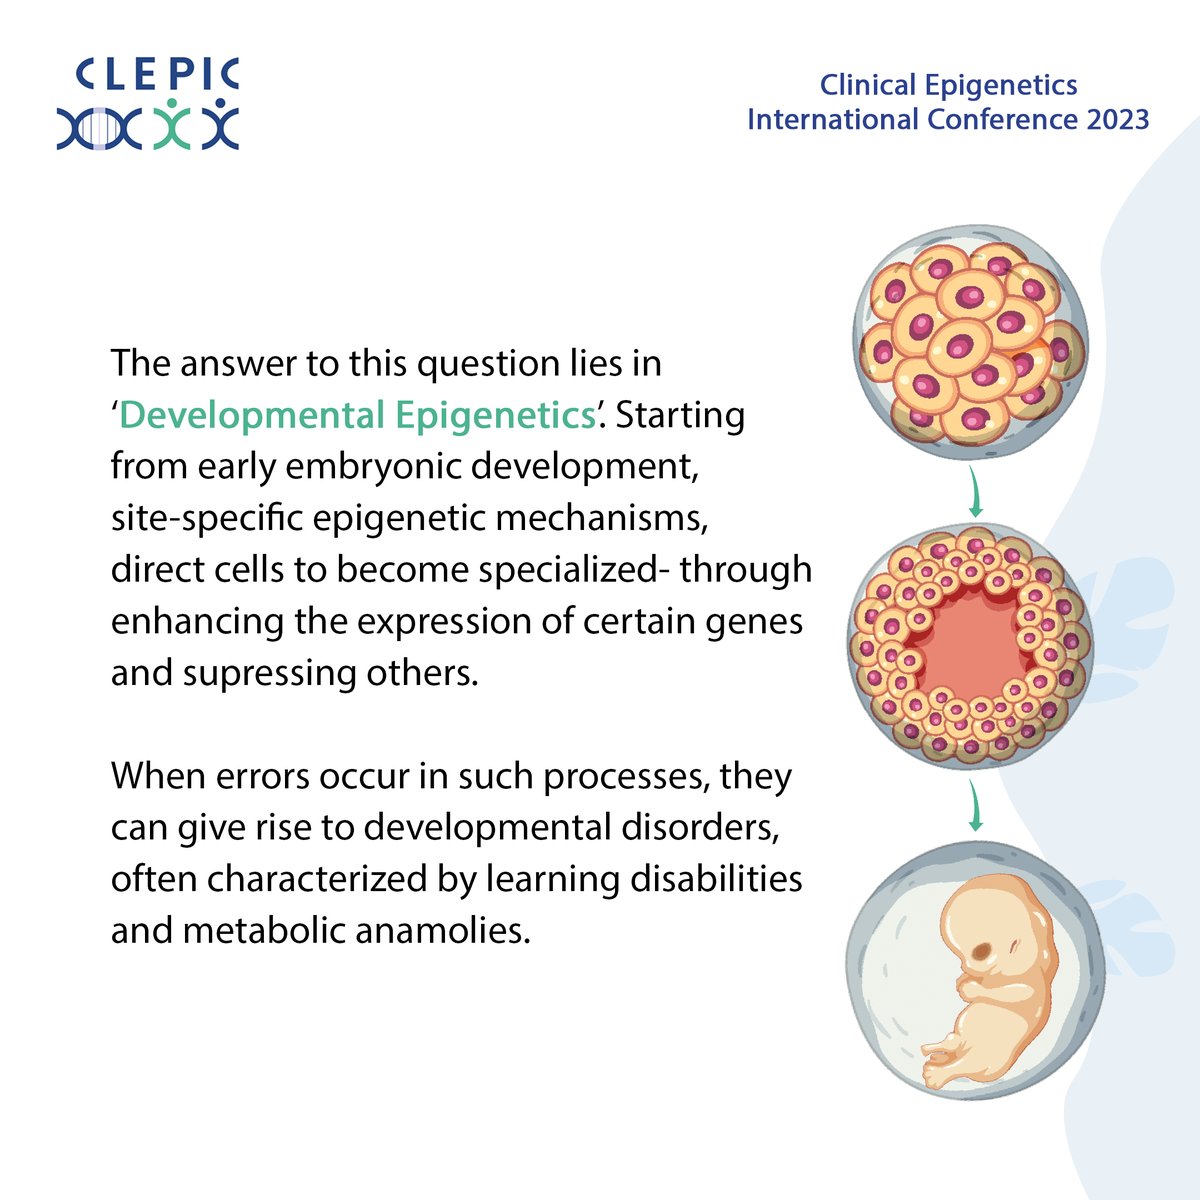 #Developmental #Epigenetics, the basis for cellular diversity and specialization. A key area of focus at #CLEPIC2023. 

@BRAINCITYWarsaw @NenckiInstitute @pumszczecin @Epigenetics @EpiExperts